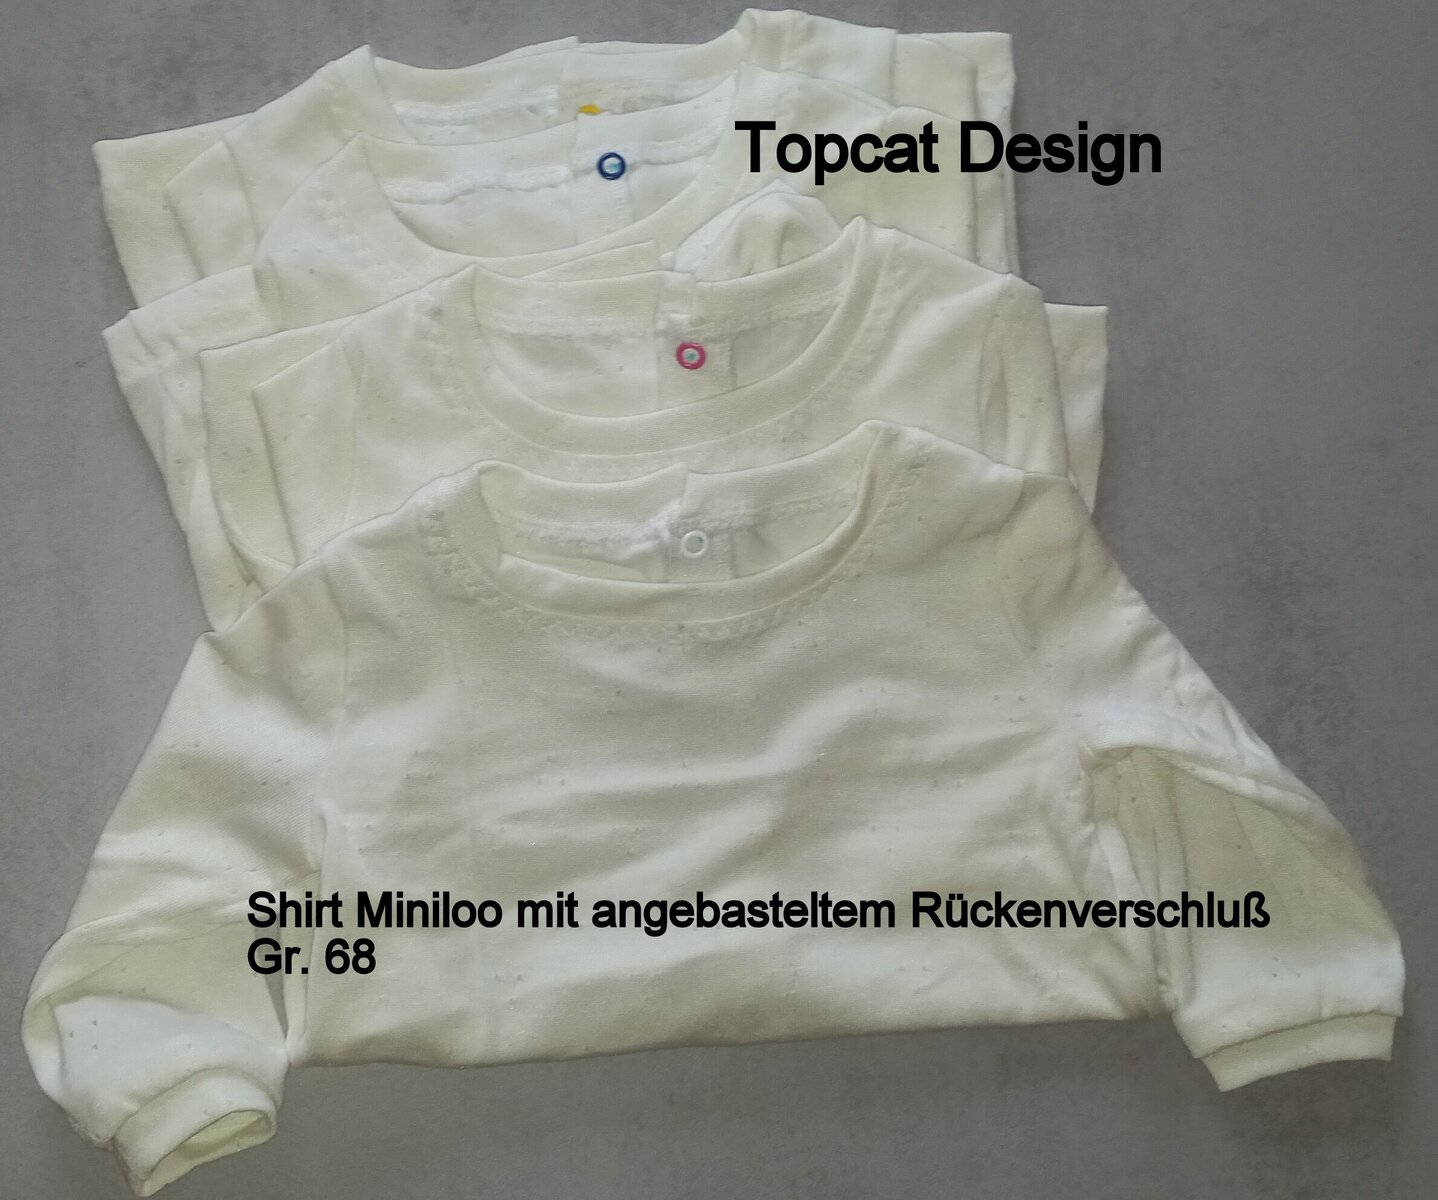 Shirt Miniloo mit Rückenverschluß Gr. 68.jpg